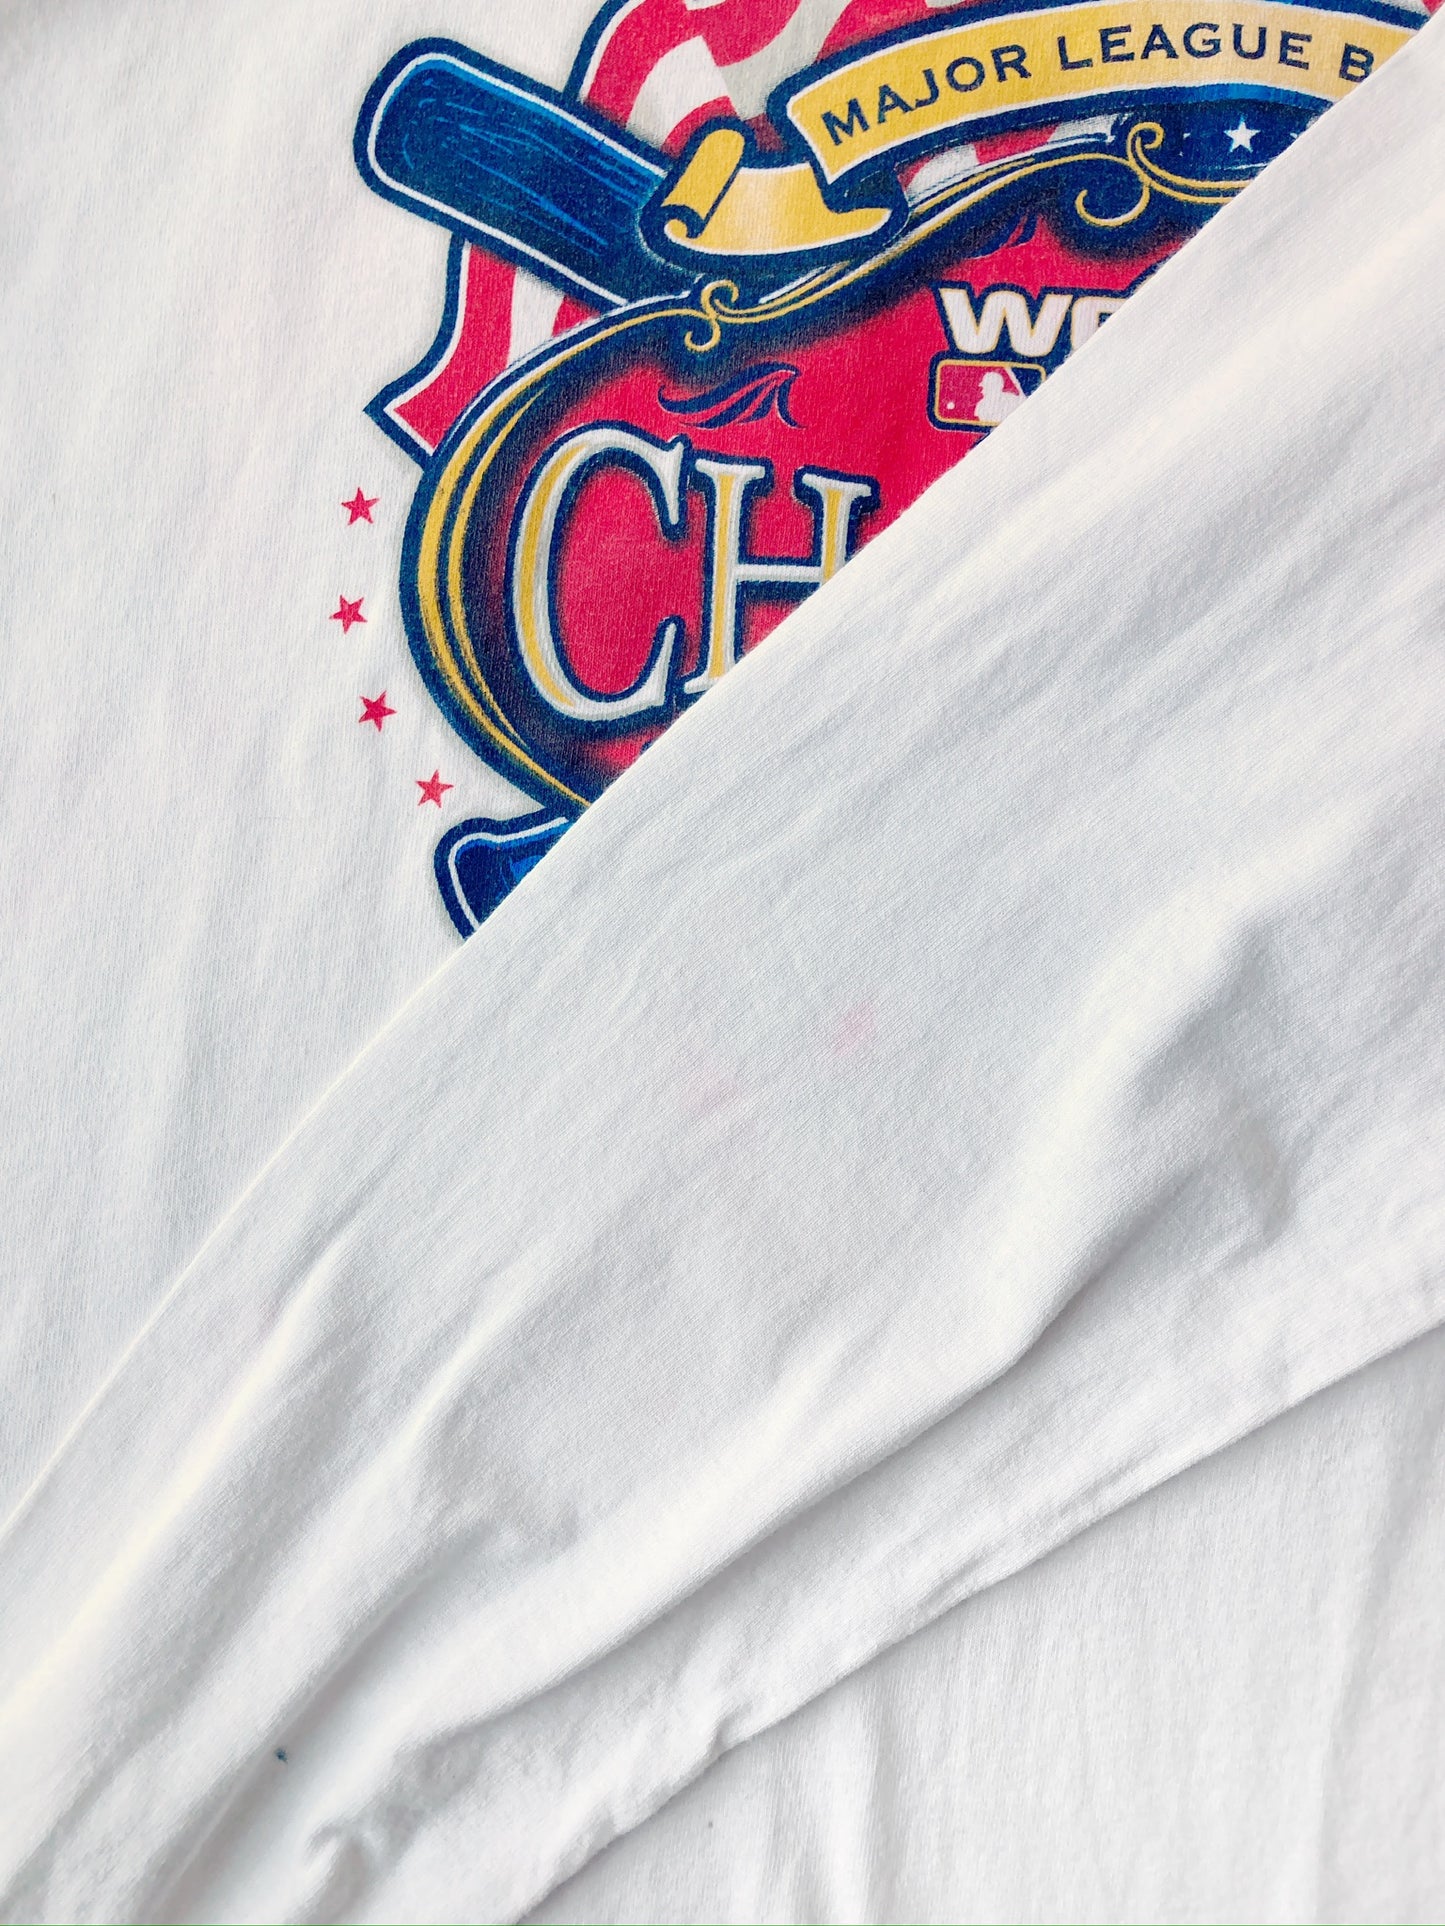 Chicago White Sox World Series T-Shirt '05 - Large